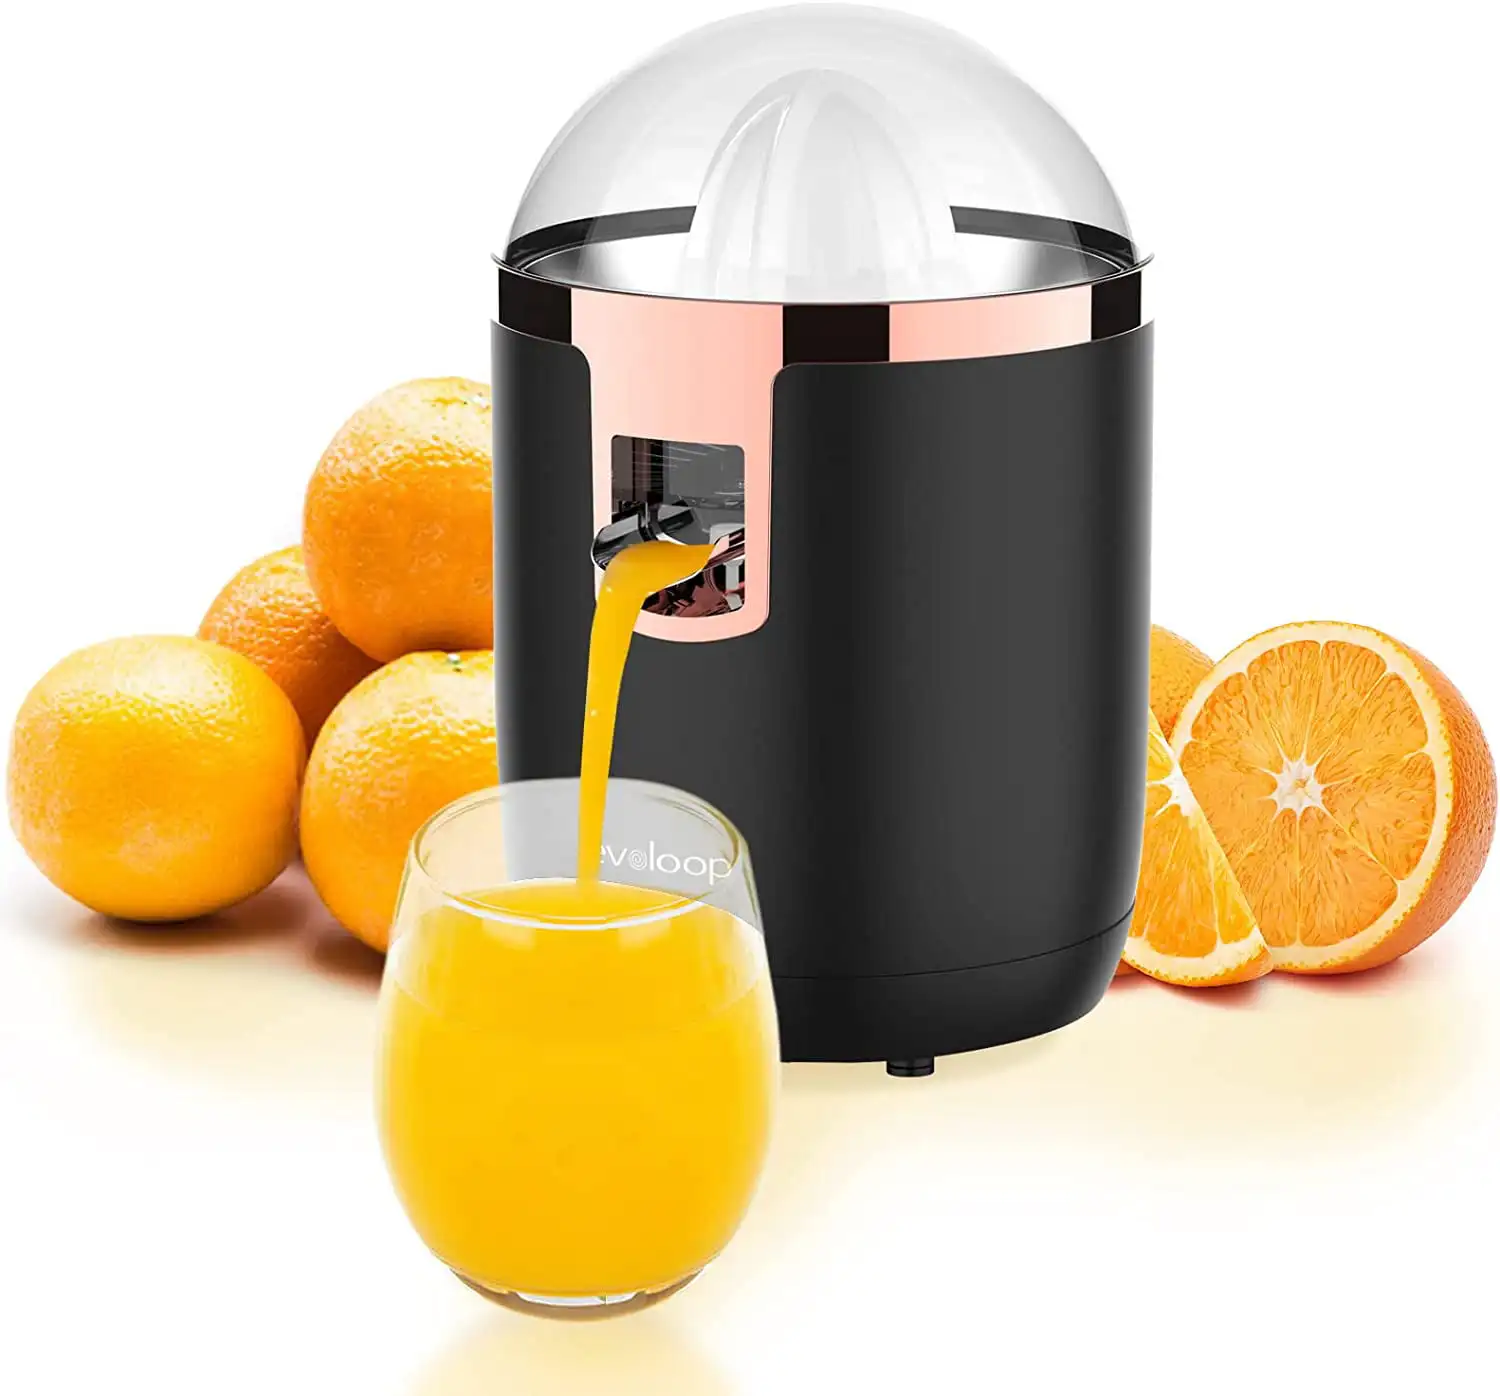 

Citrus Juicer, Orange Juice Squeezer with 2 Size Cones, Powerful Motor for Orange, Lemon, Grapefruit, Easy to Clean, Black/Stain